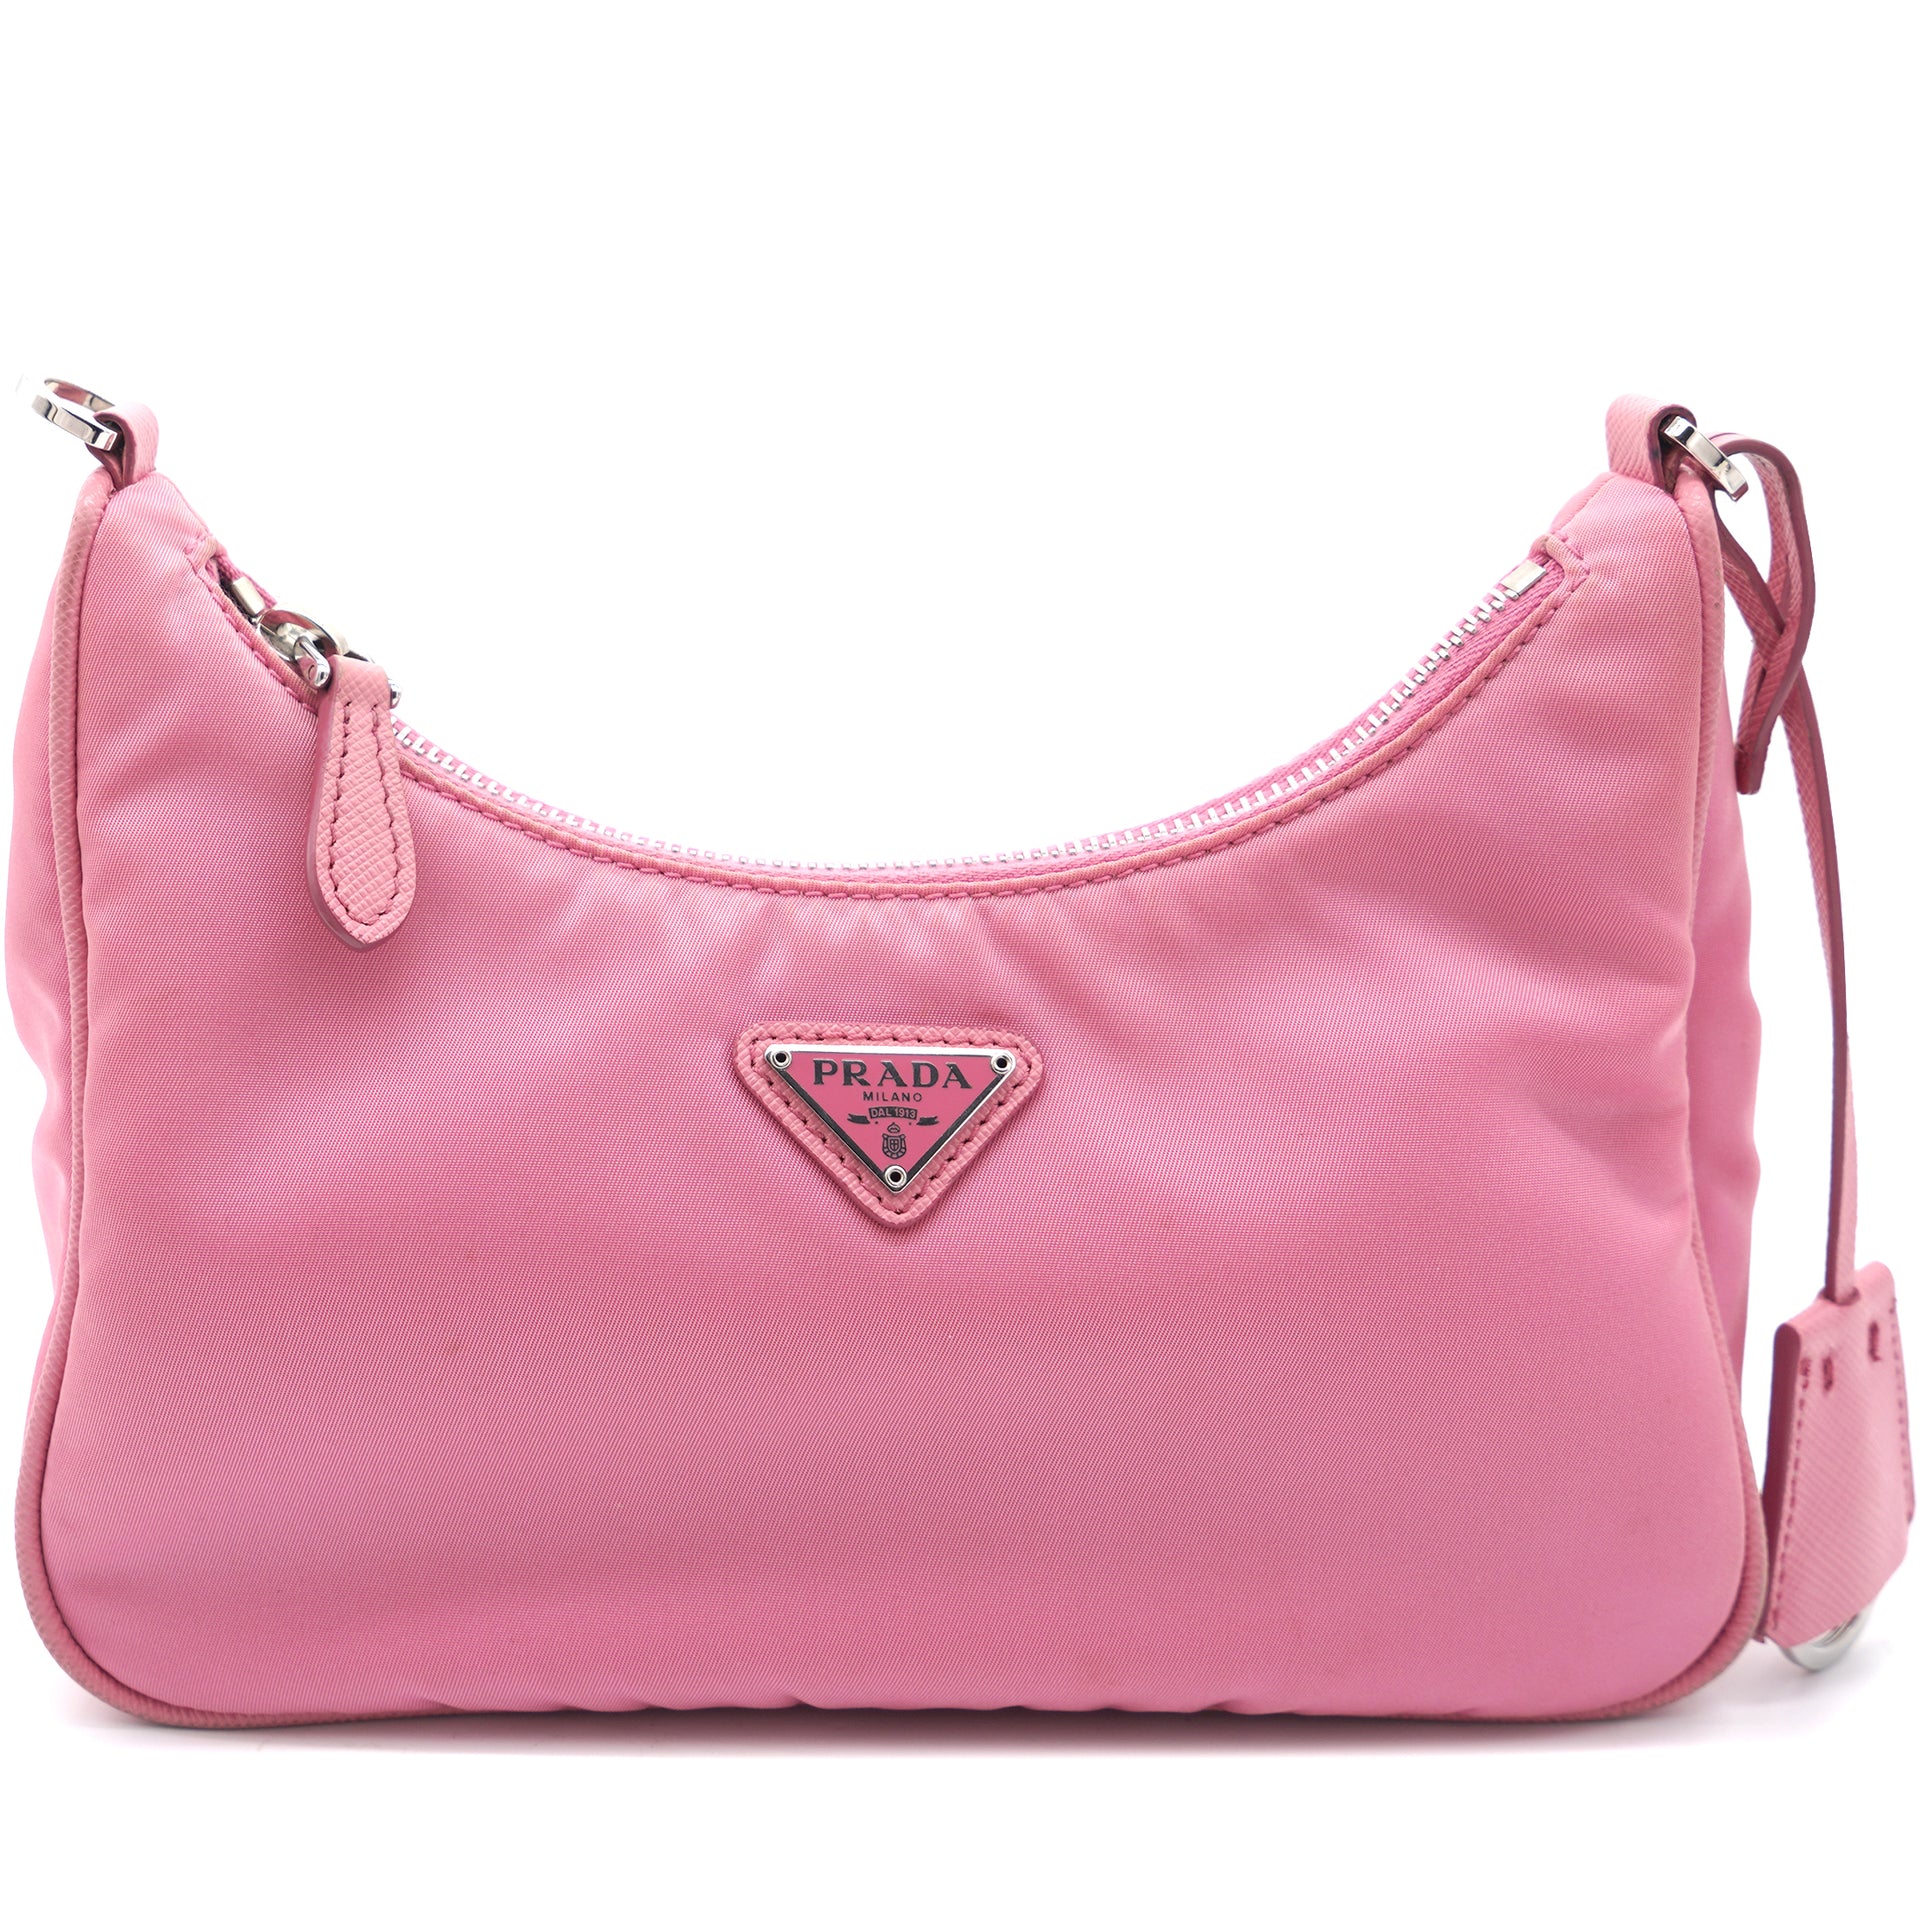 Prada - Authenticated Re-Edition 2005 Handbag - Cloth Pink Plain for Women, Very Good Condition